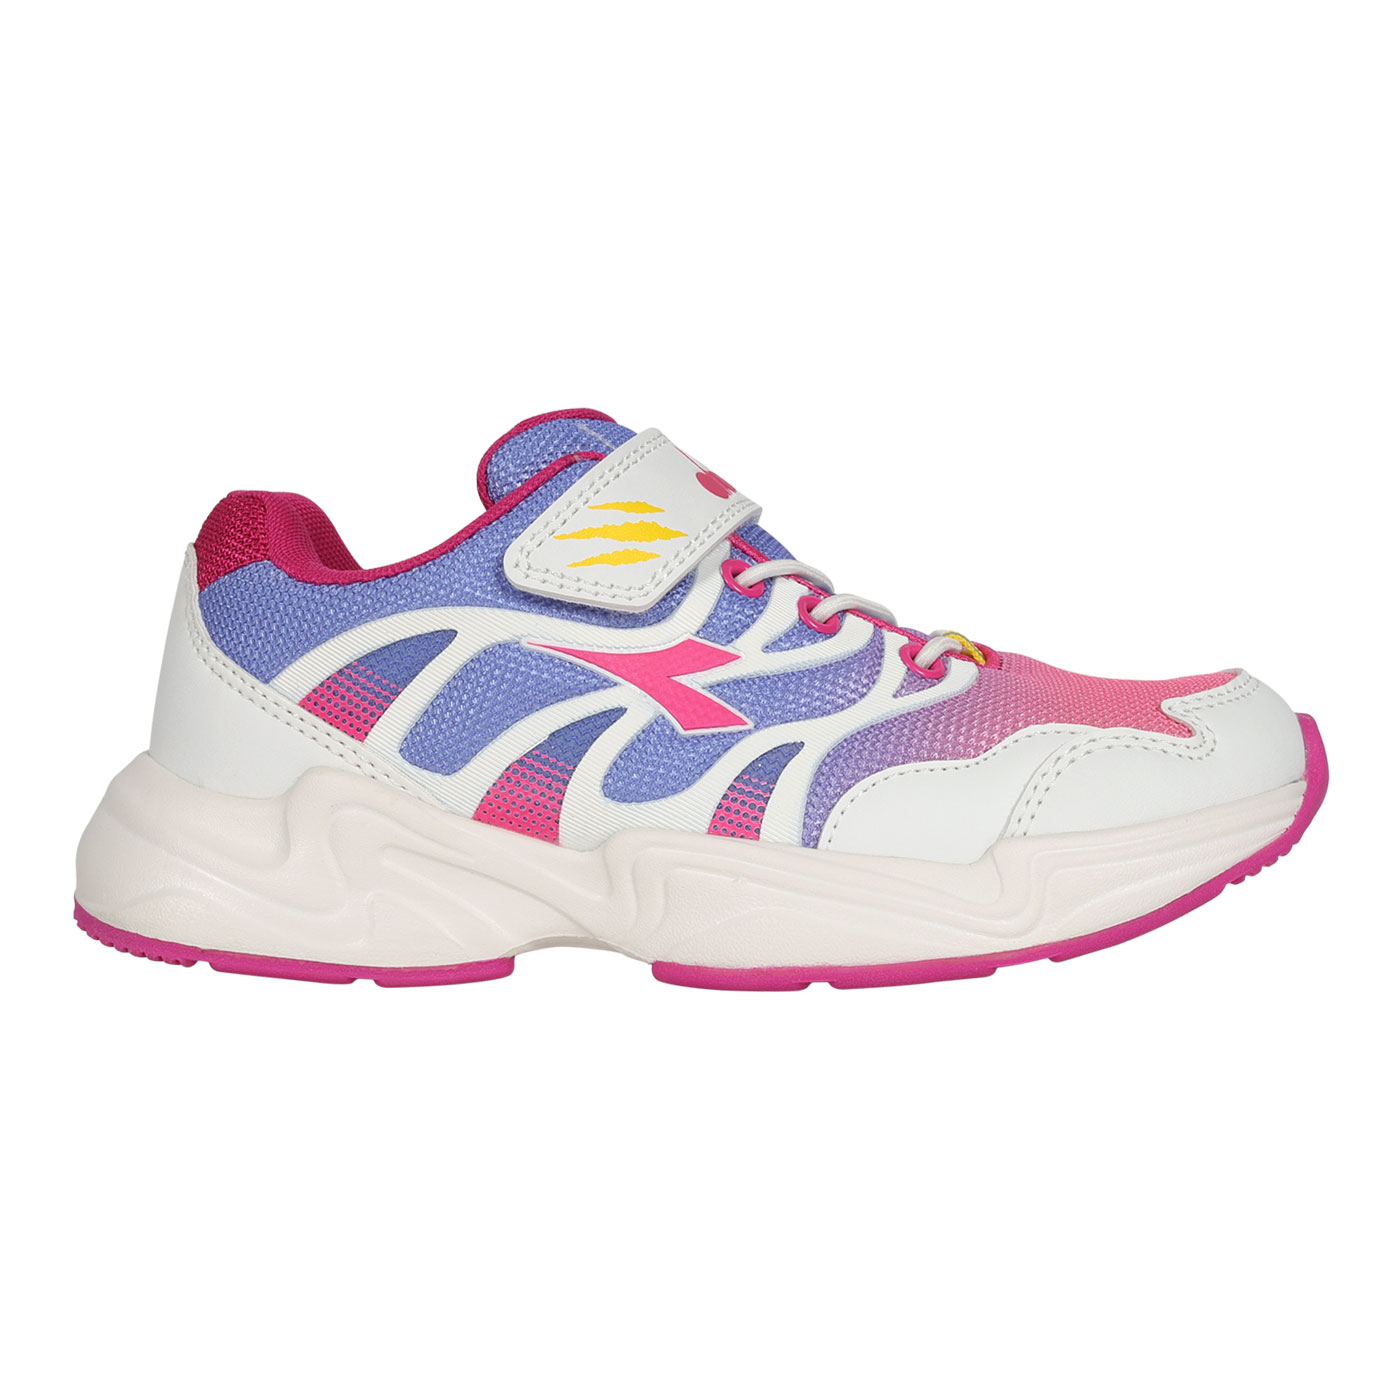 DIADORA 中童專業輕量慢跑鞋  DA13088 - 紫桃紅白